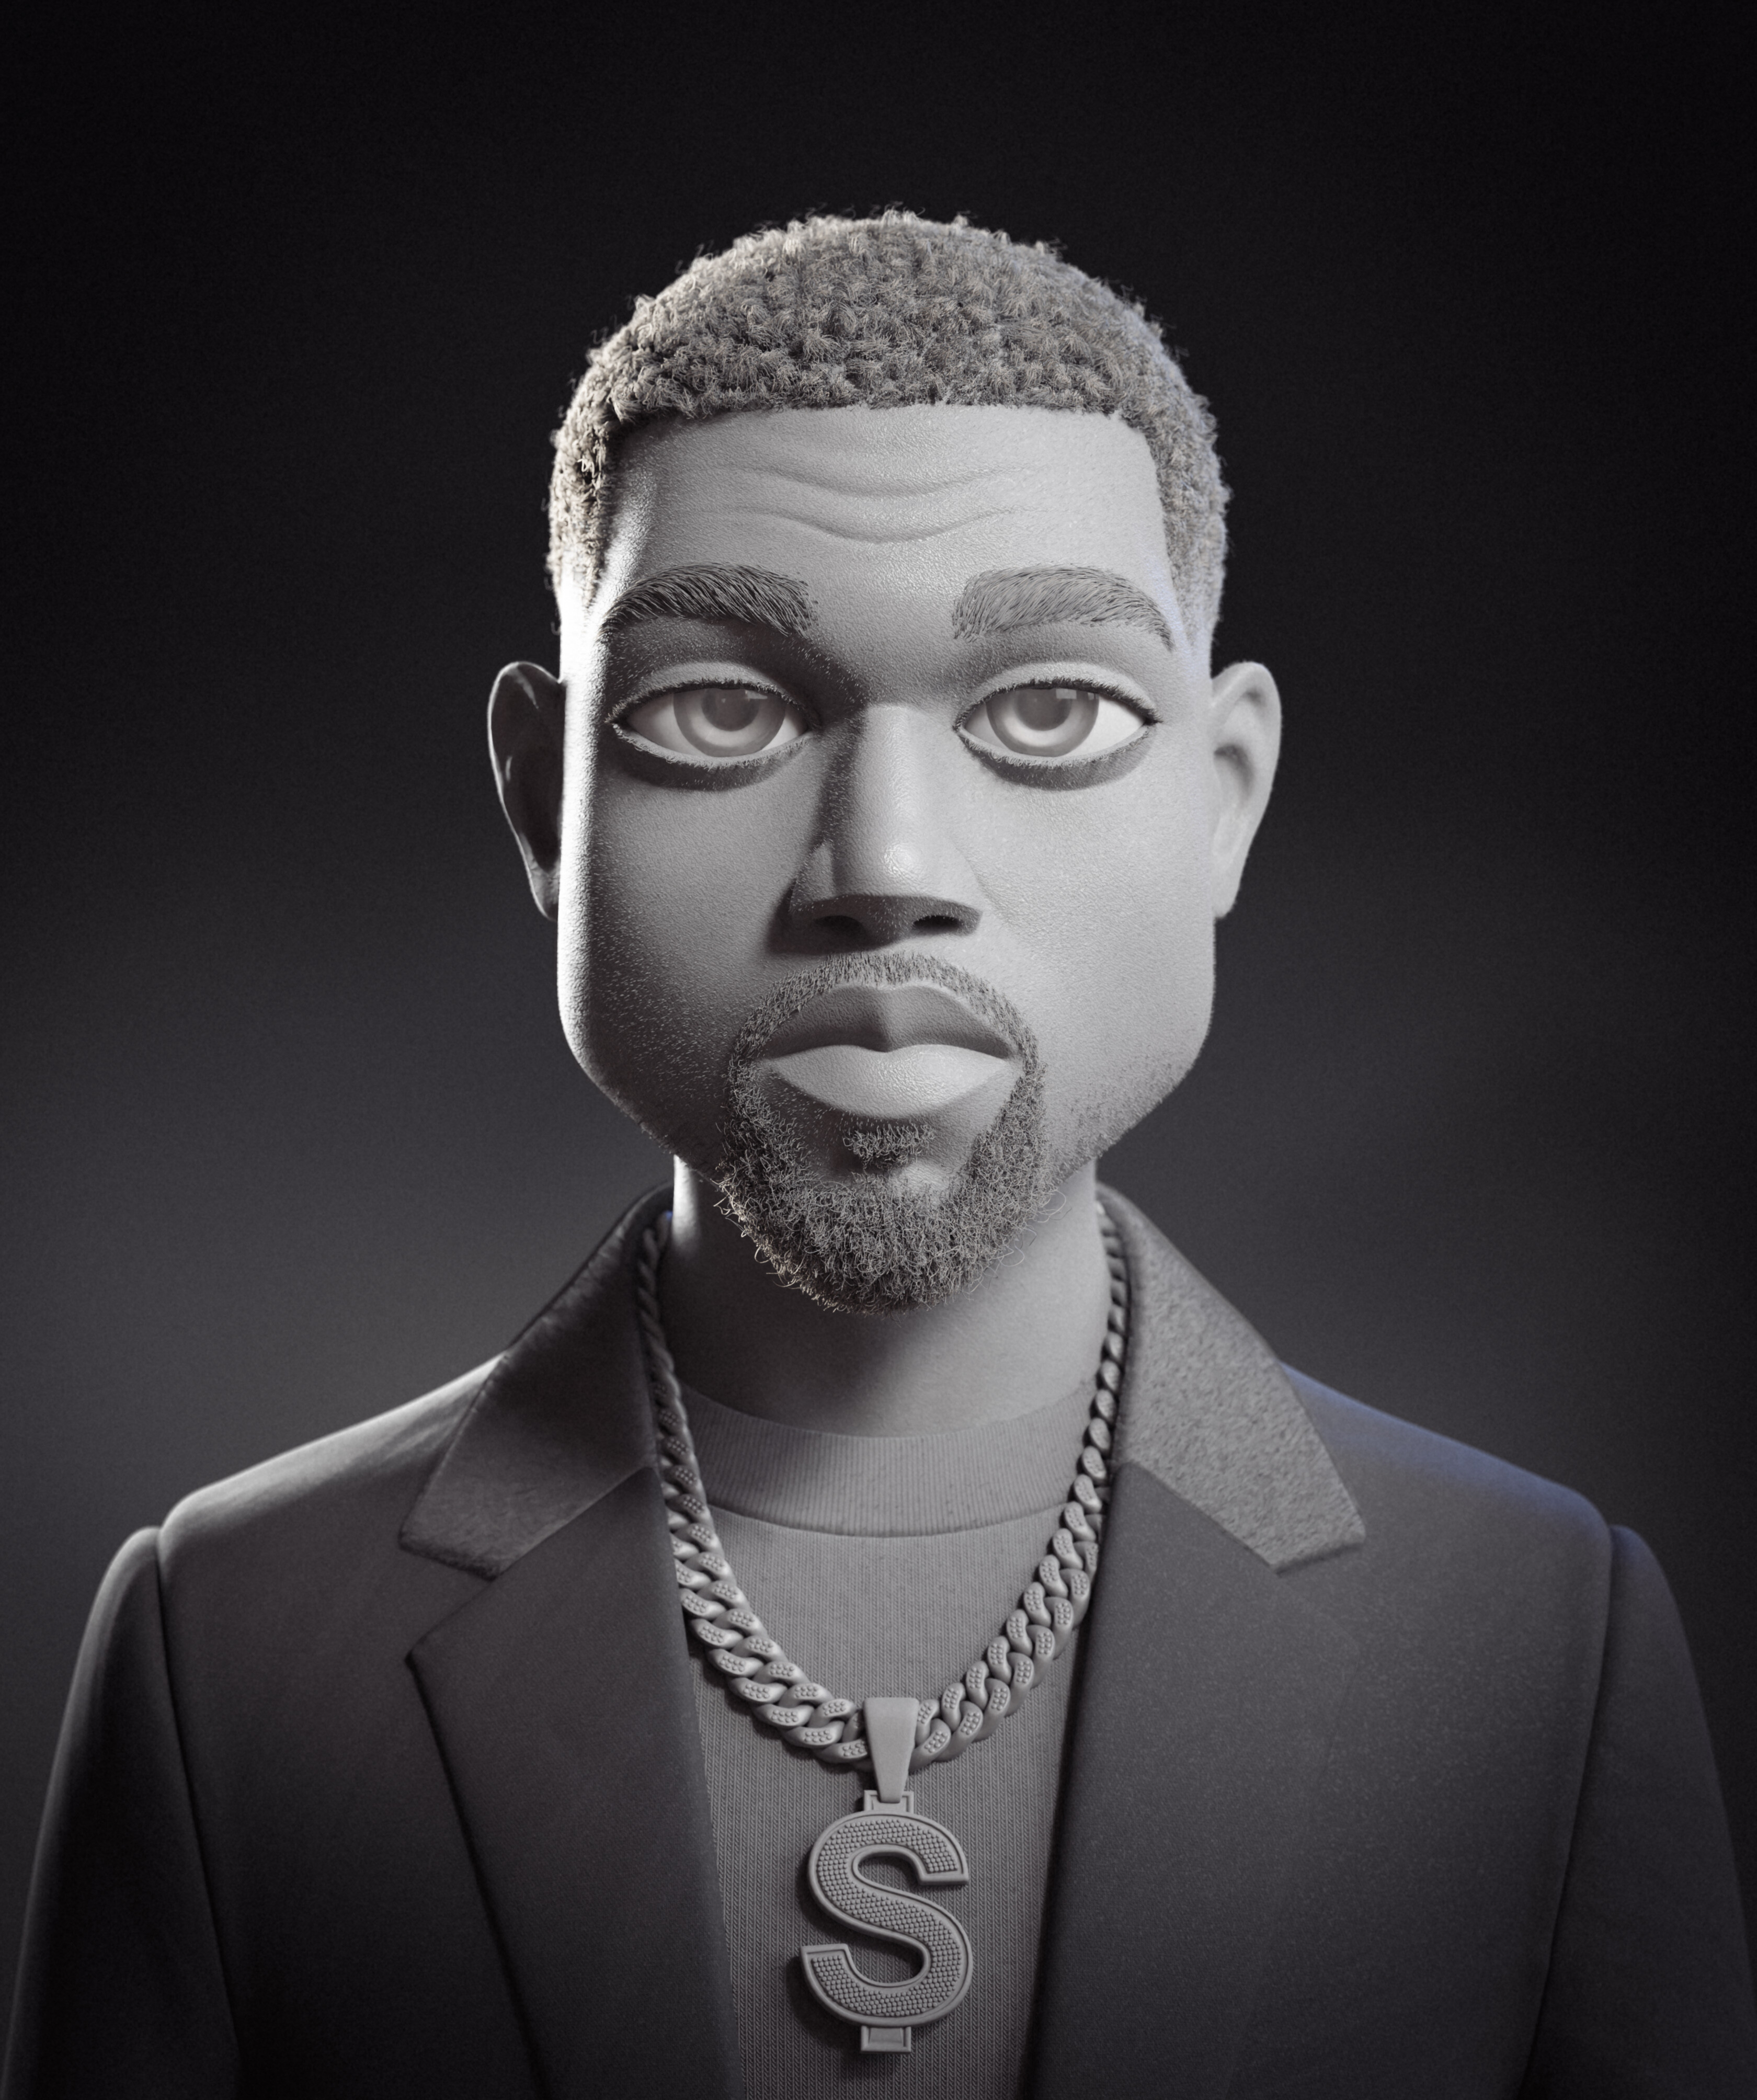 Kanye West - Finished Projects - Blender Artists Community